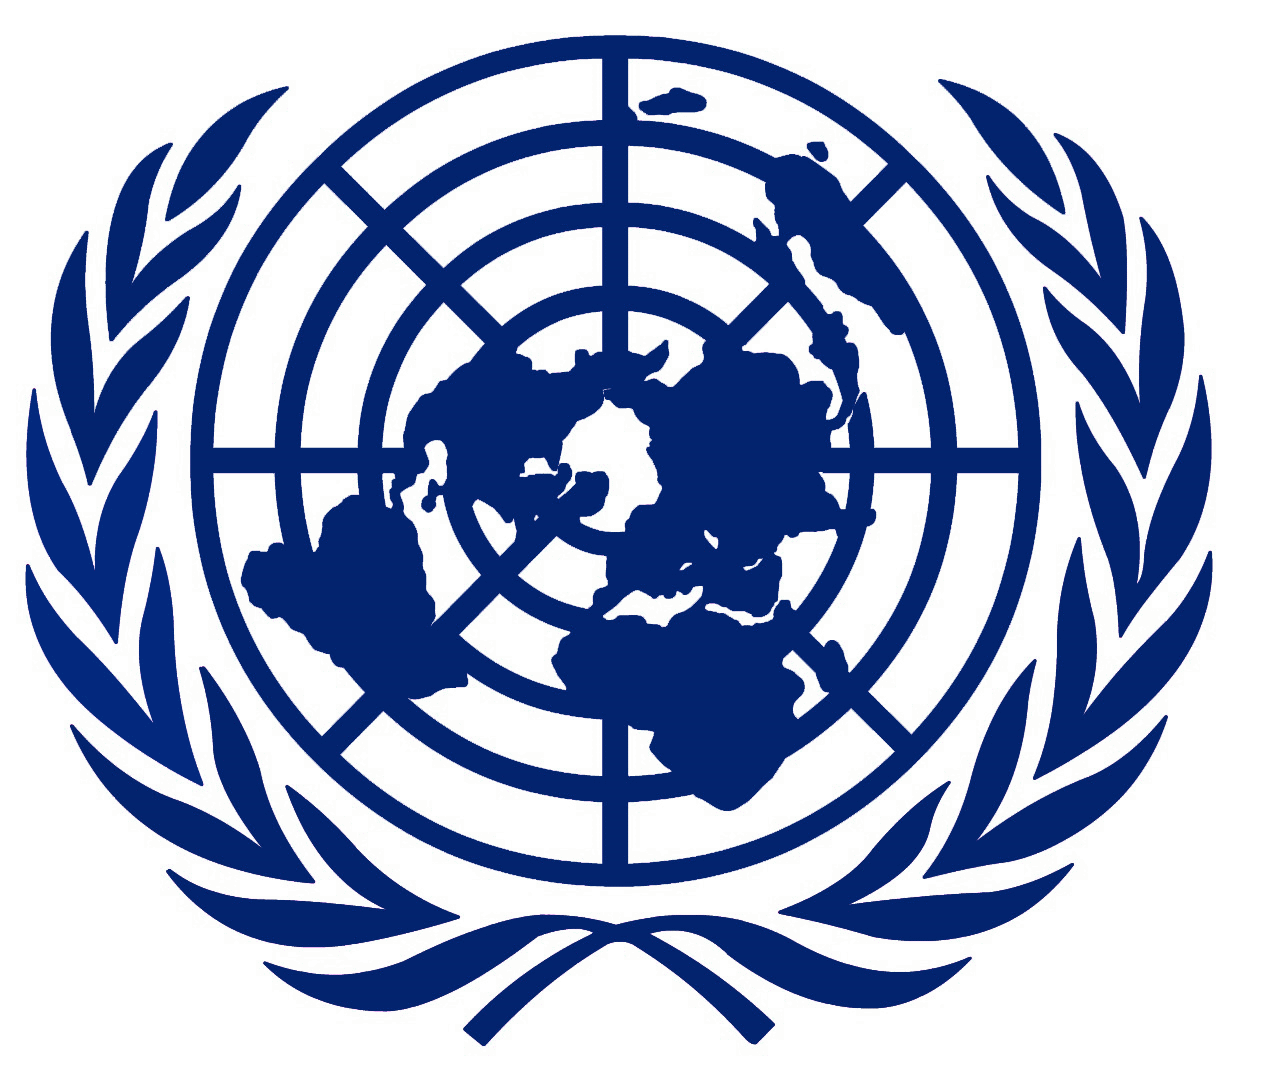 United world nation. Всемирная организация ООН лого. Совет безопасности ООН логотип. Совет безопасности ООН символ. Совет безопасности ООН герб.